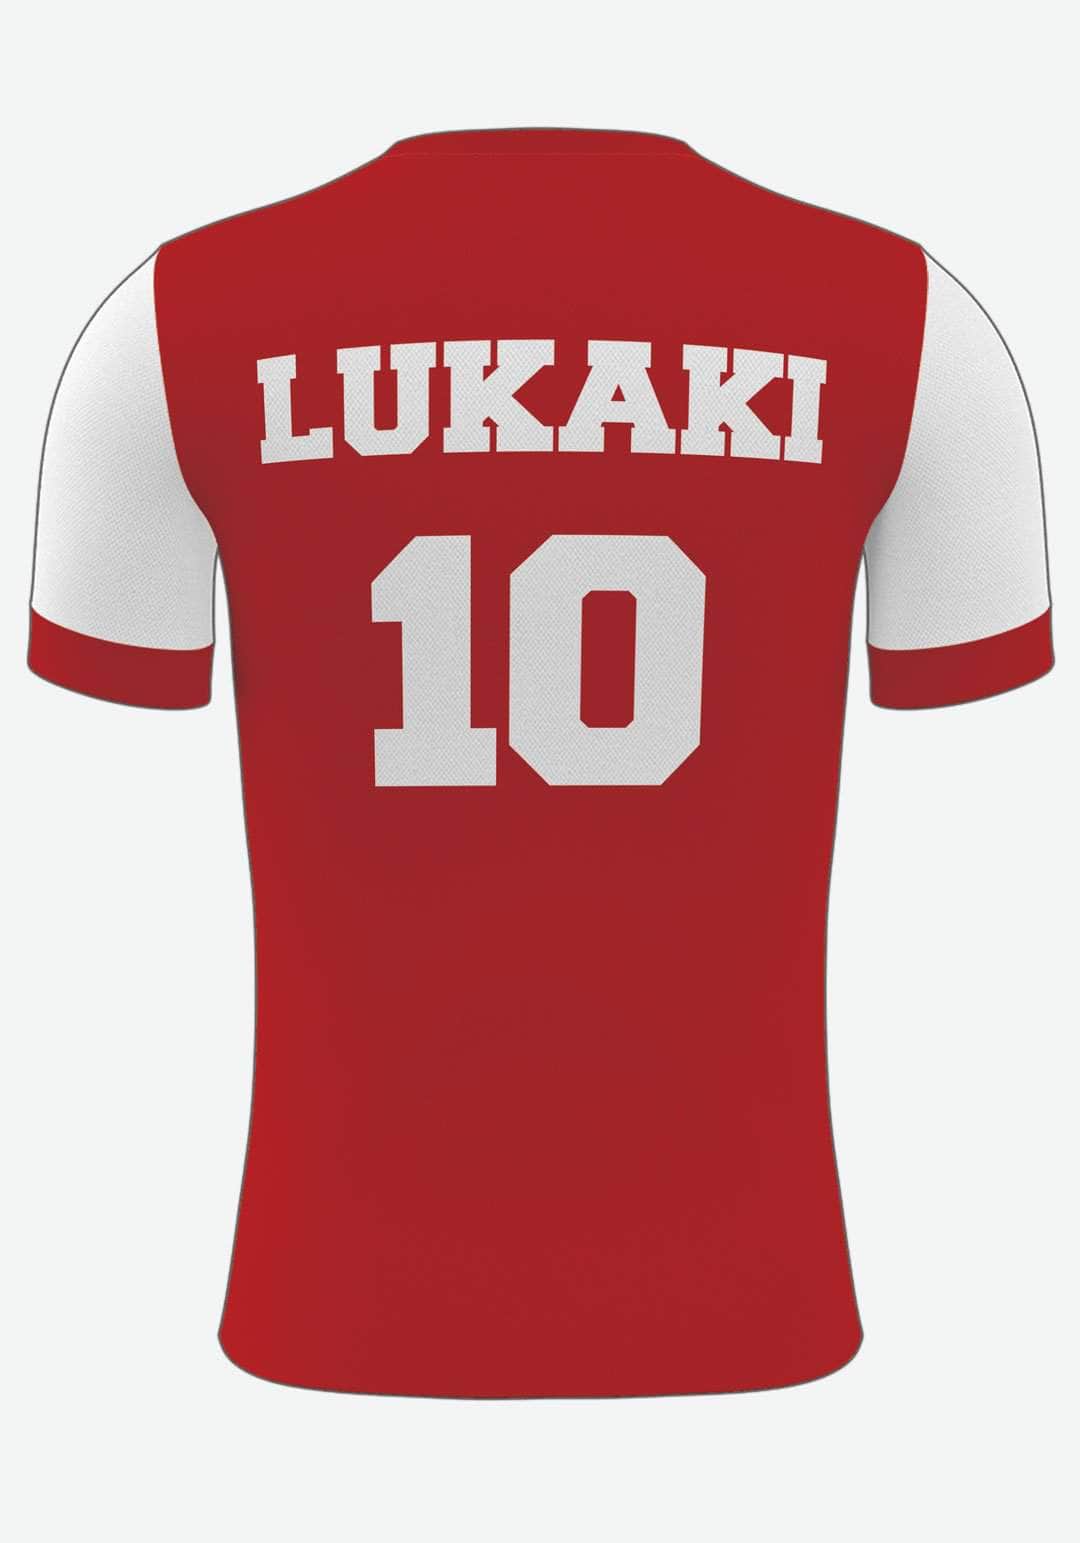 Se Arsenal Fodboldplakat - med eget navn og nummer, 21x30 hos Lukaki.dk